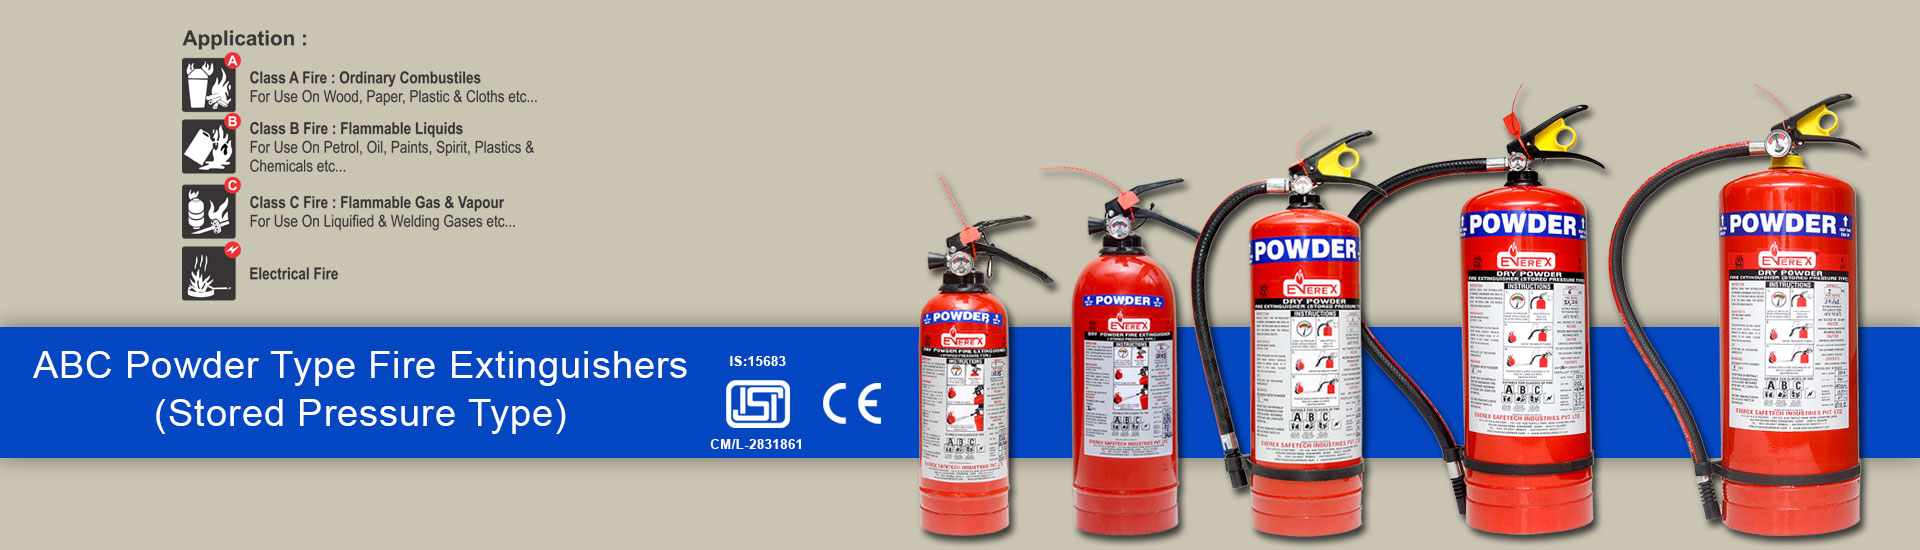 ABC powder type fire extinguishers